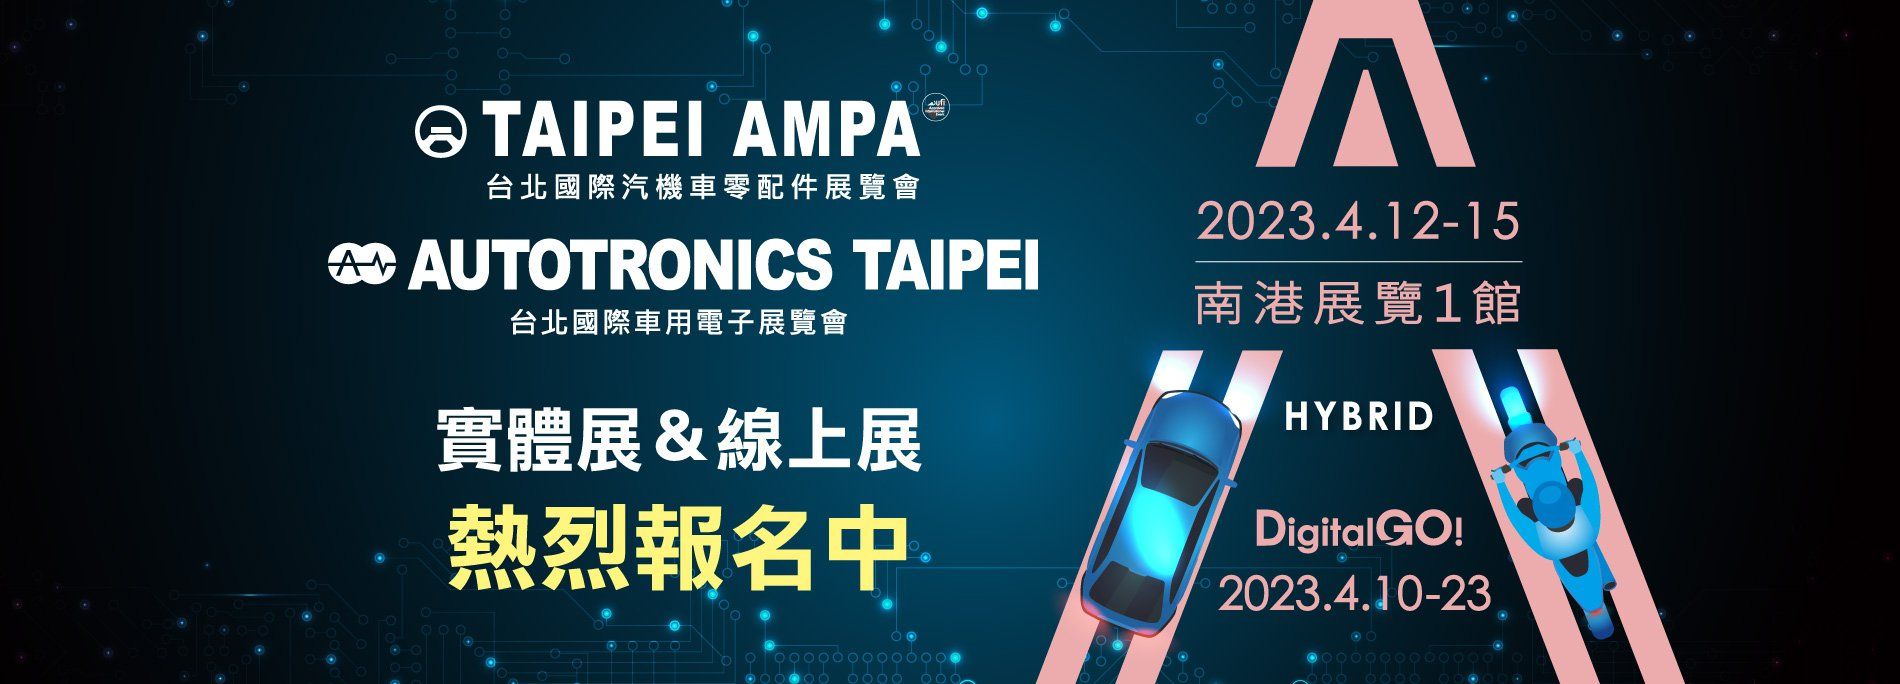 Taipeh AMPA 2023.